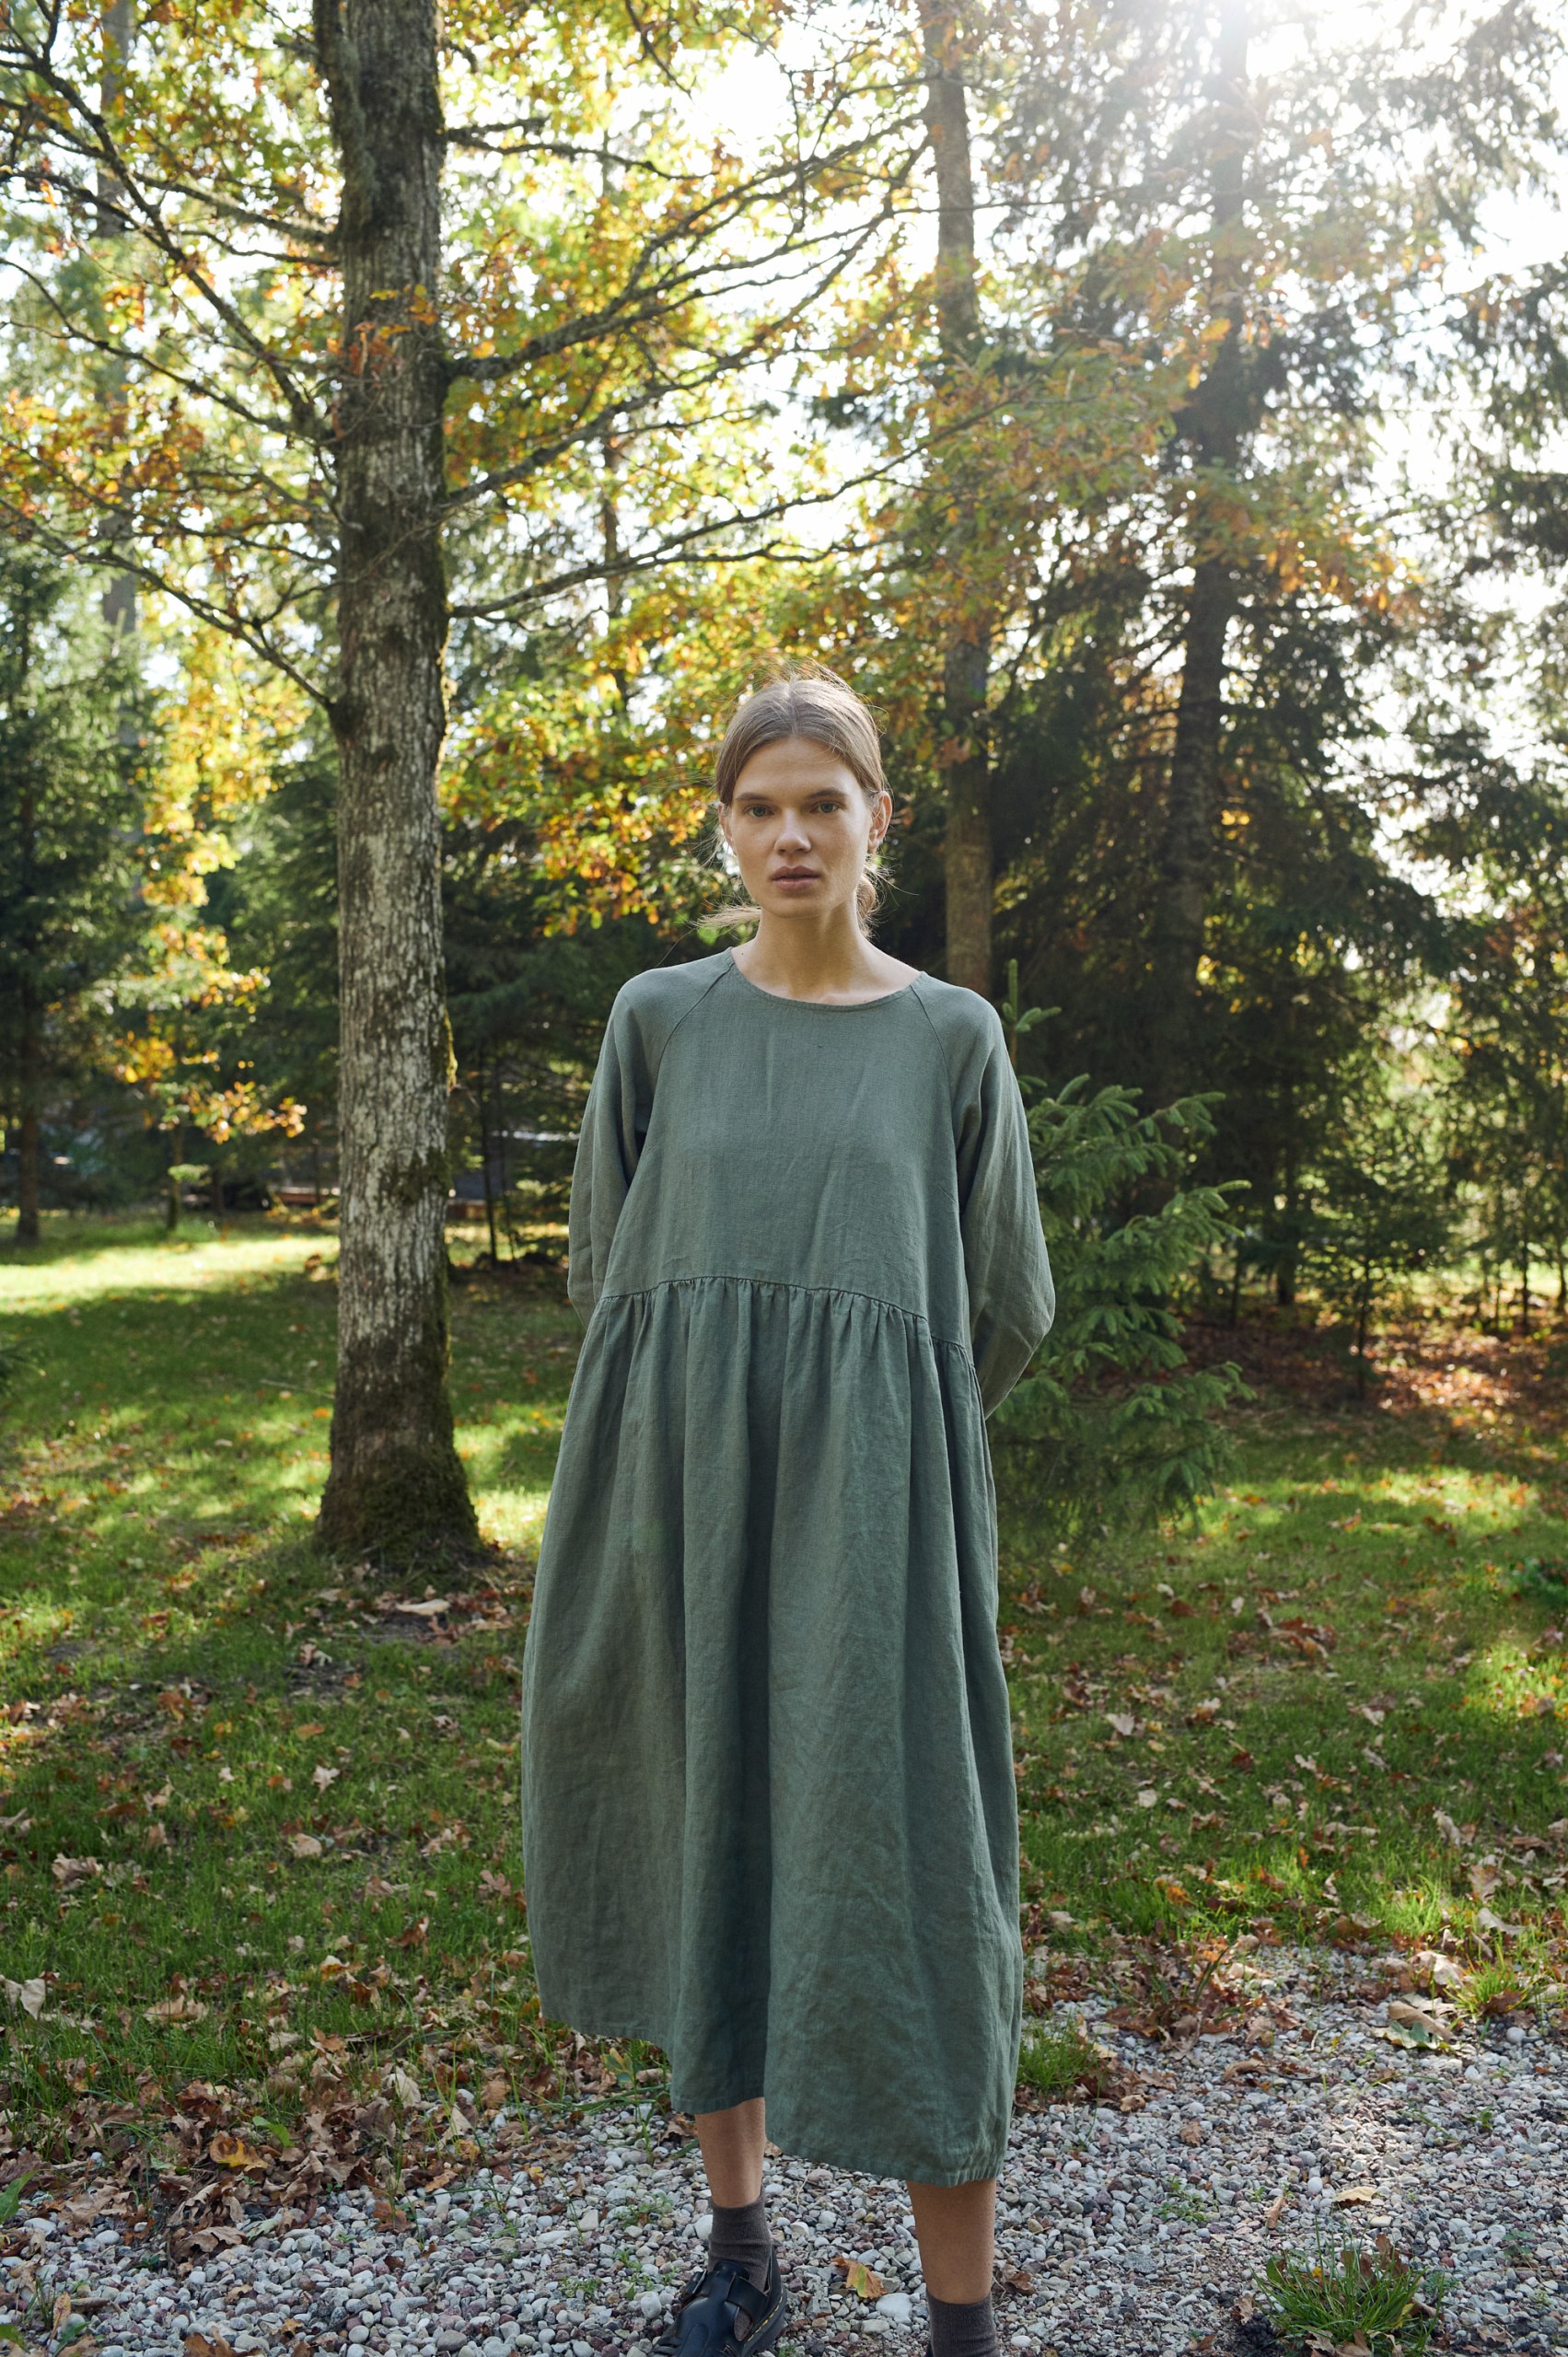 A woman in an oversized linen smock dress